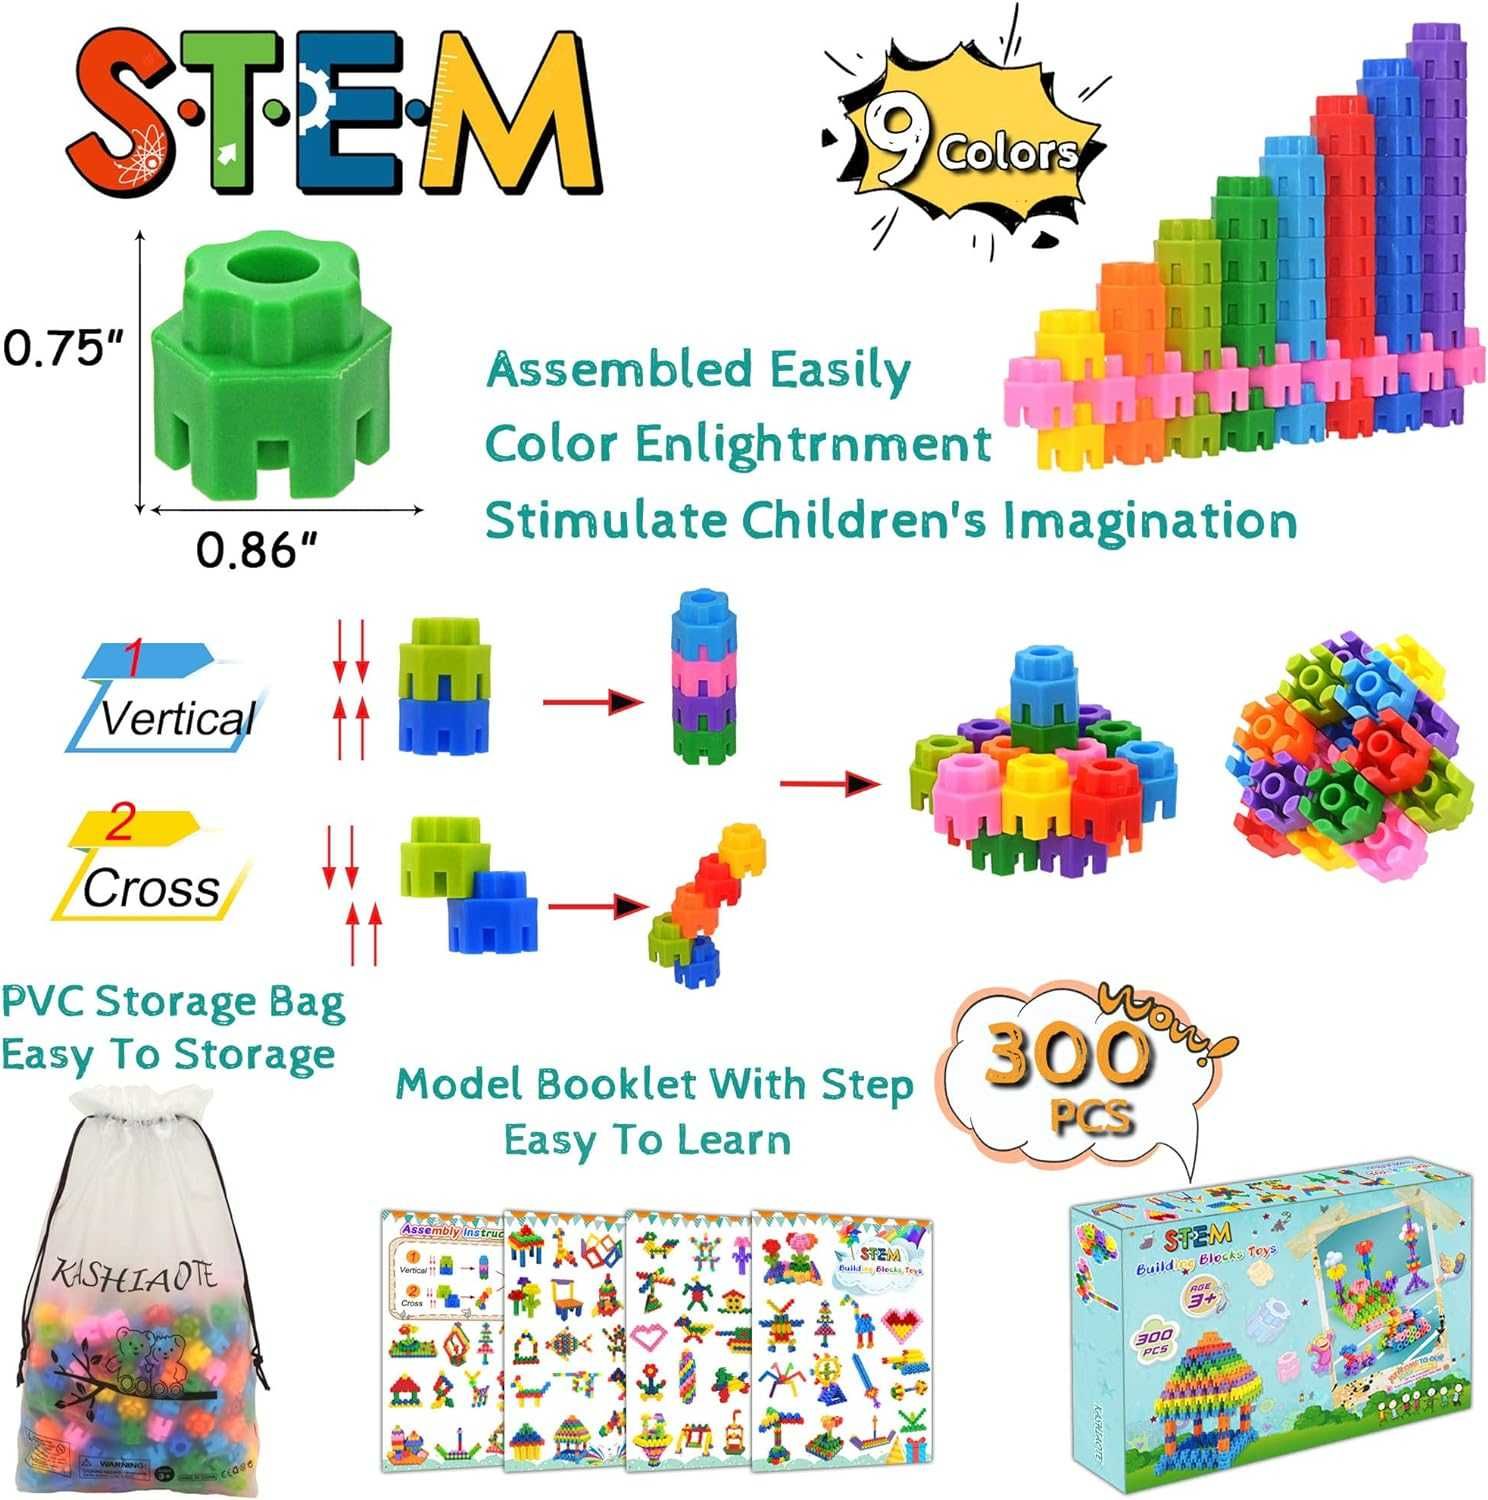 STEM Building blocks toy конструктор 300 части